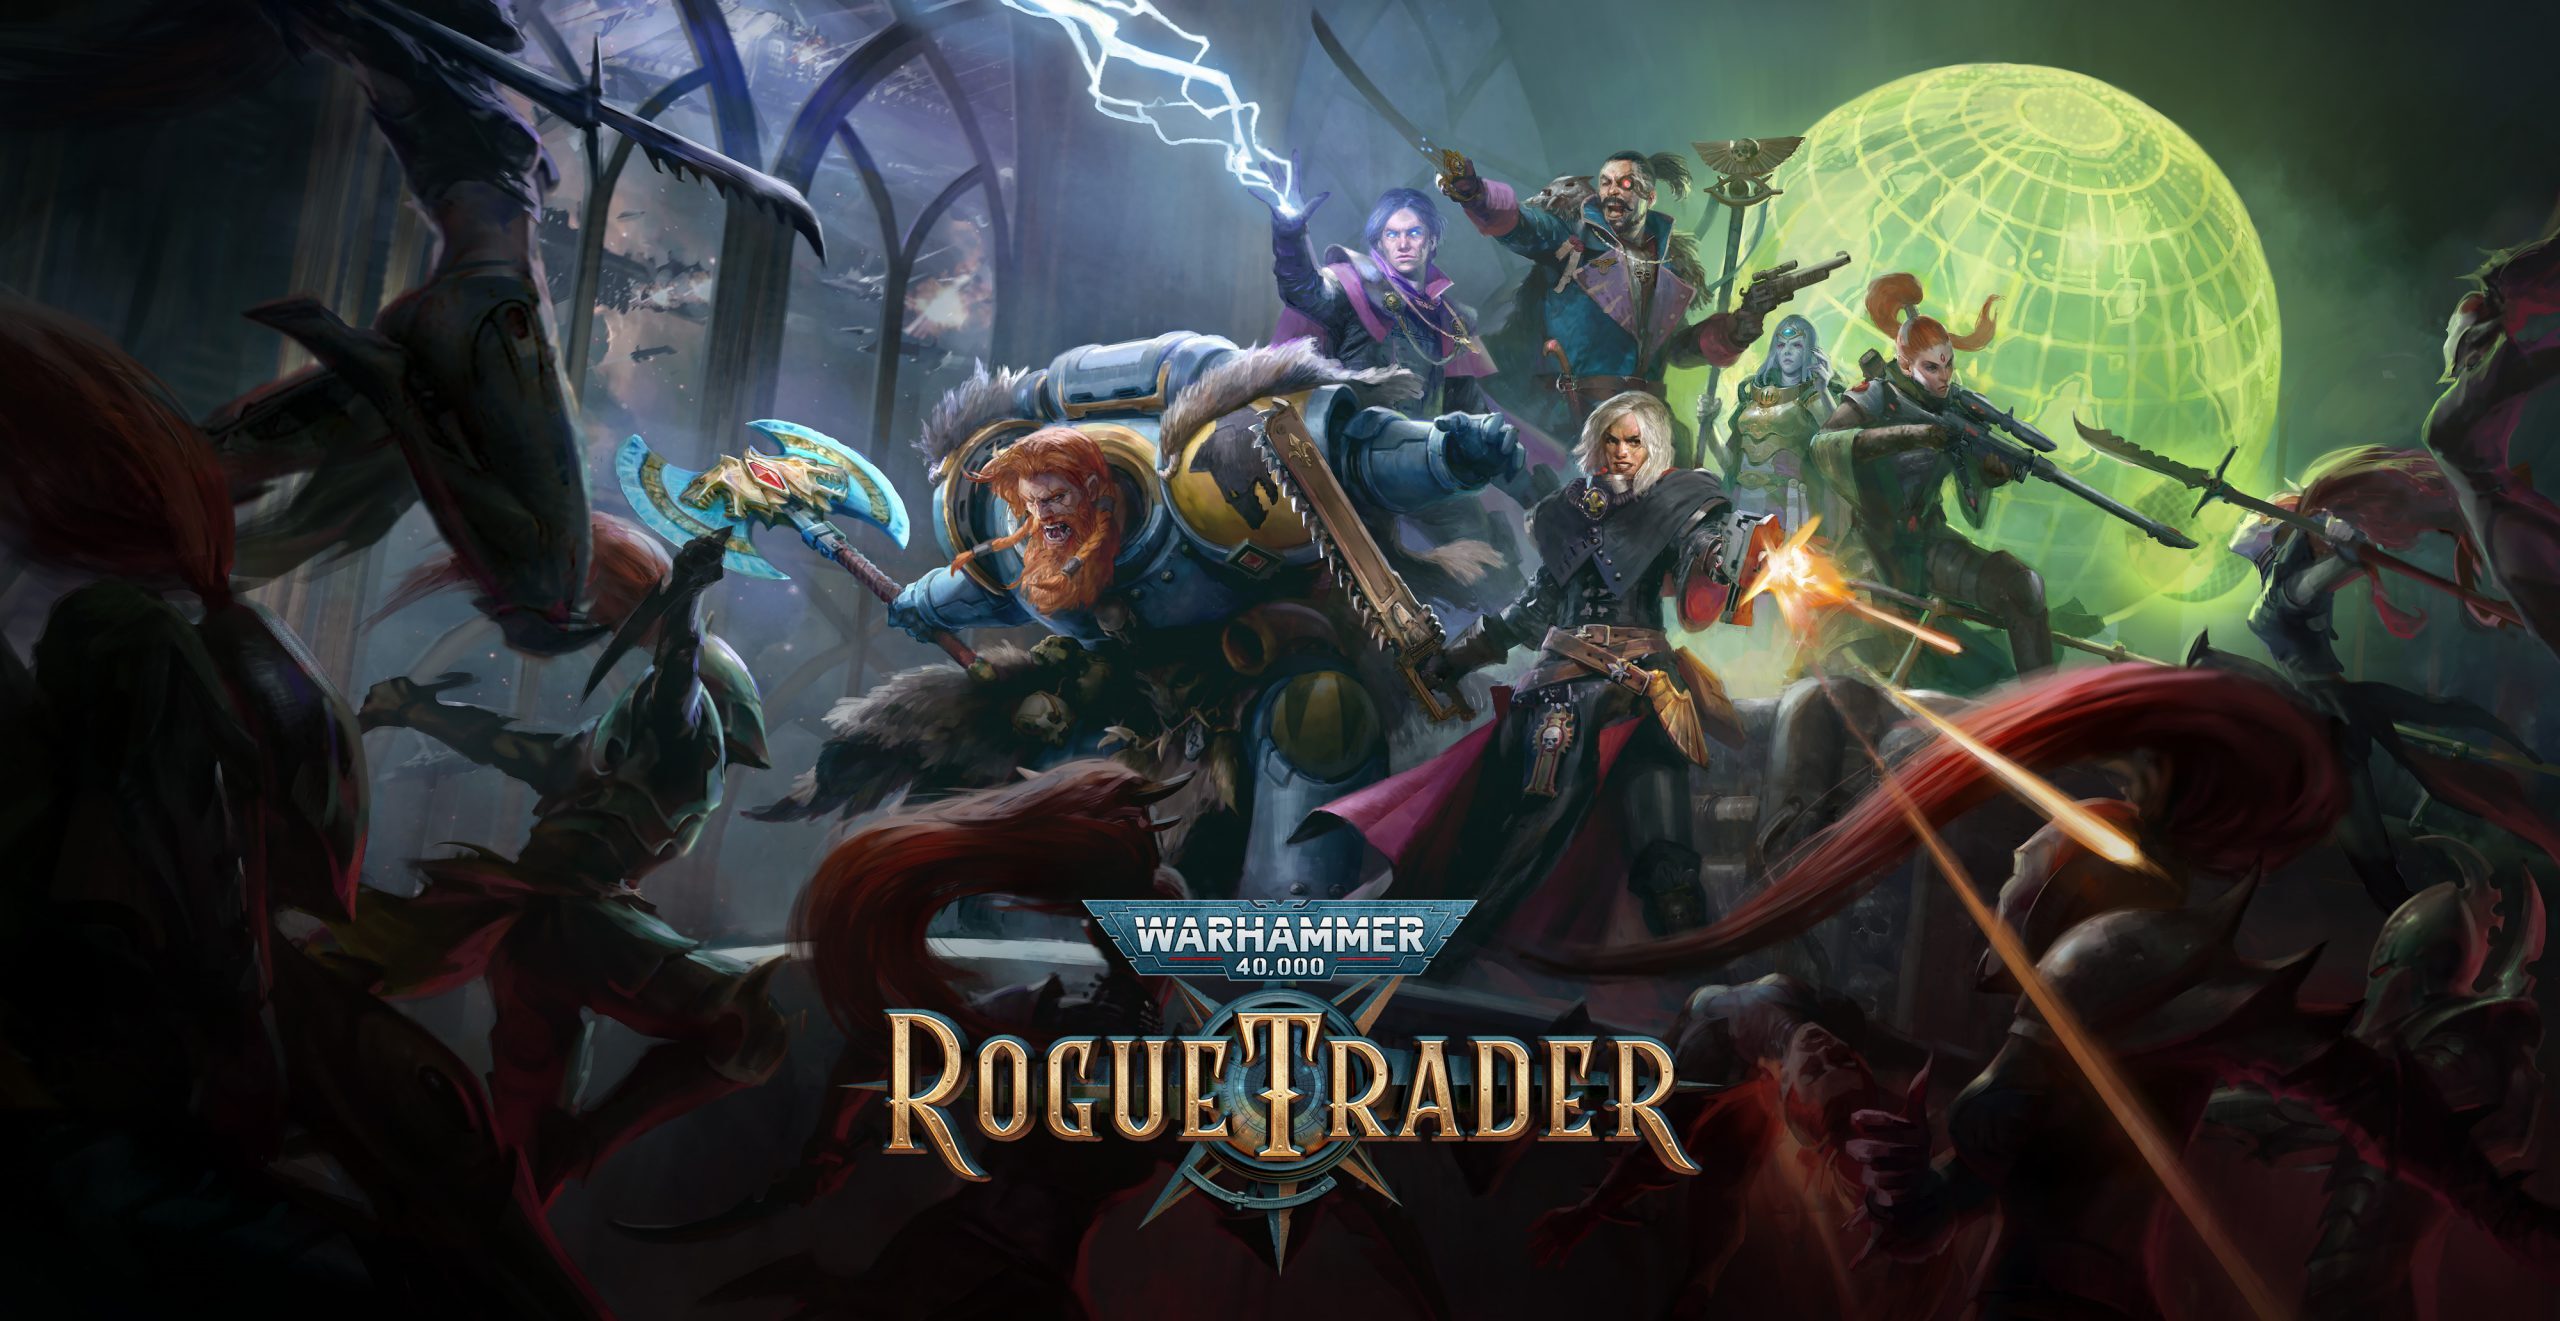 Warhammer 40,000: Rogue Trader launches December 7